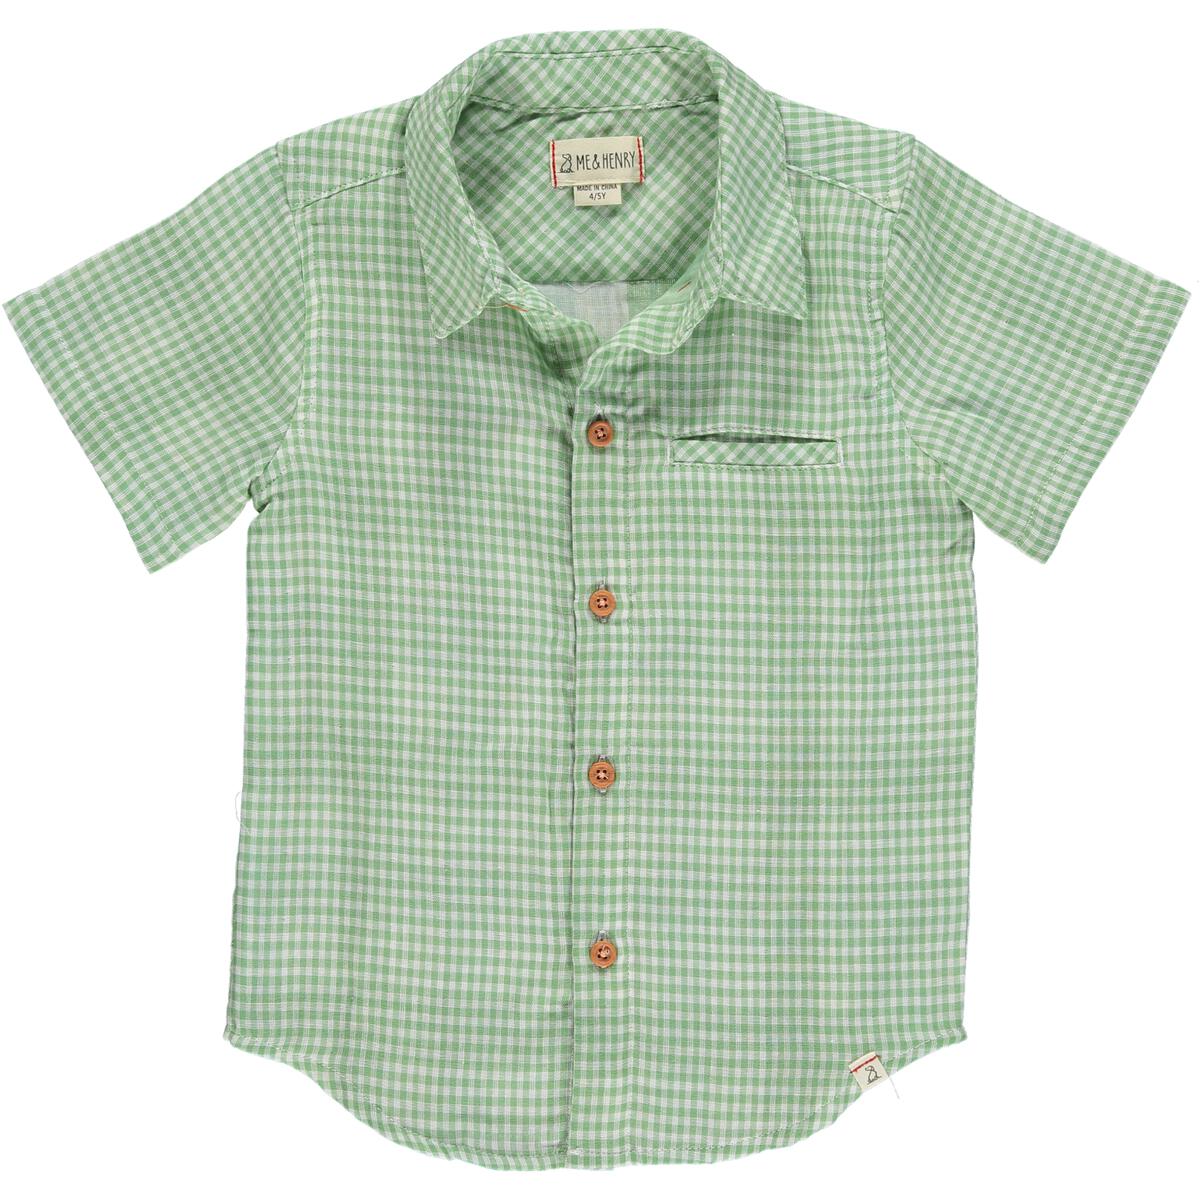 me and Henry Newport green plaid short sleeve collared shirt, short sleeve, toddler, little boy, light weight, pocket, collar, wood buttons, dressy